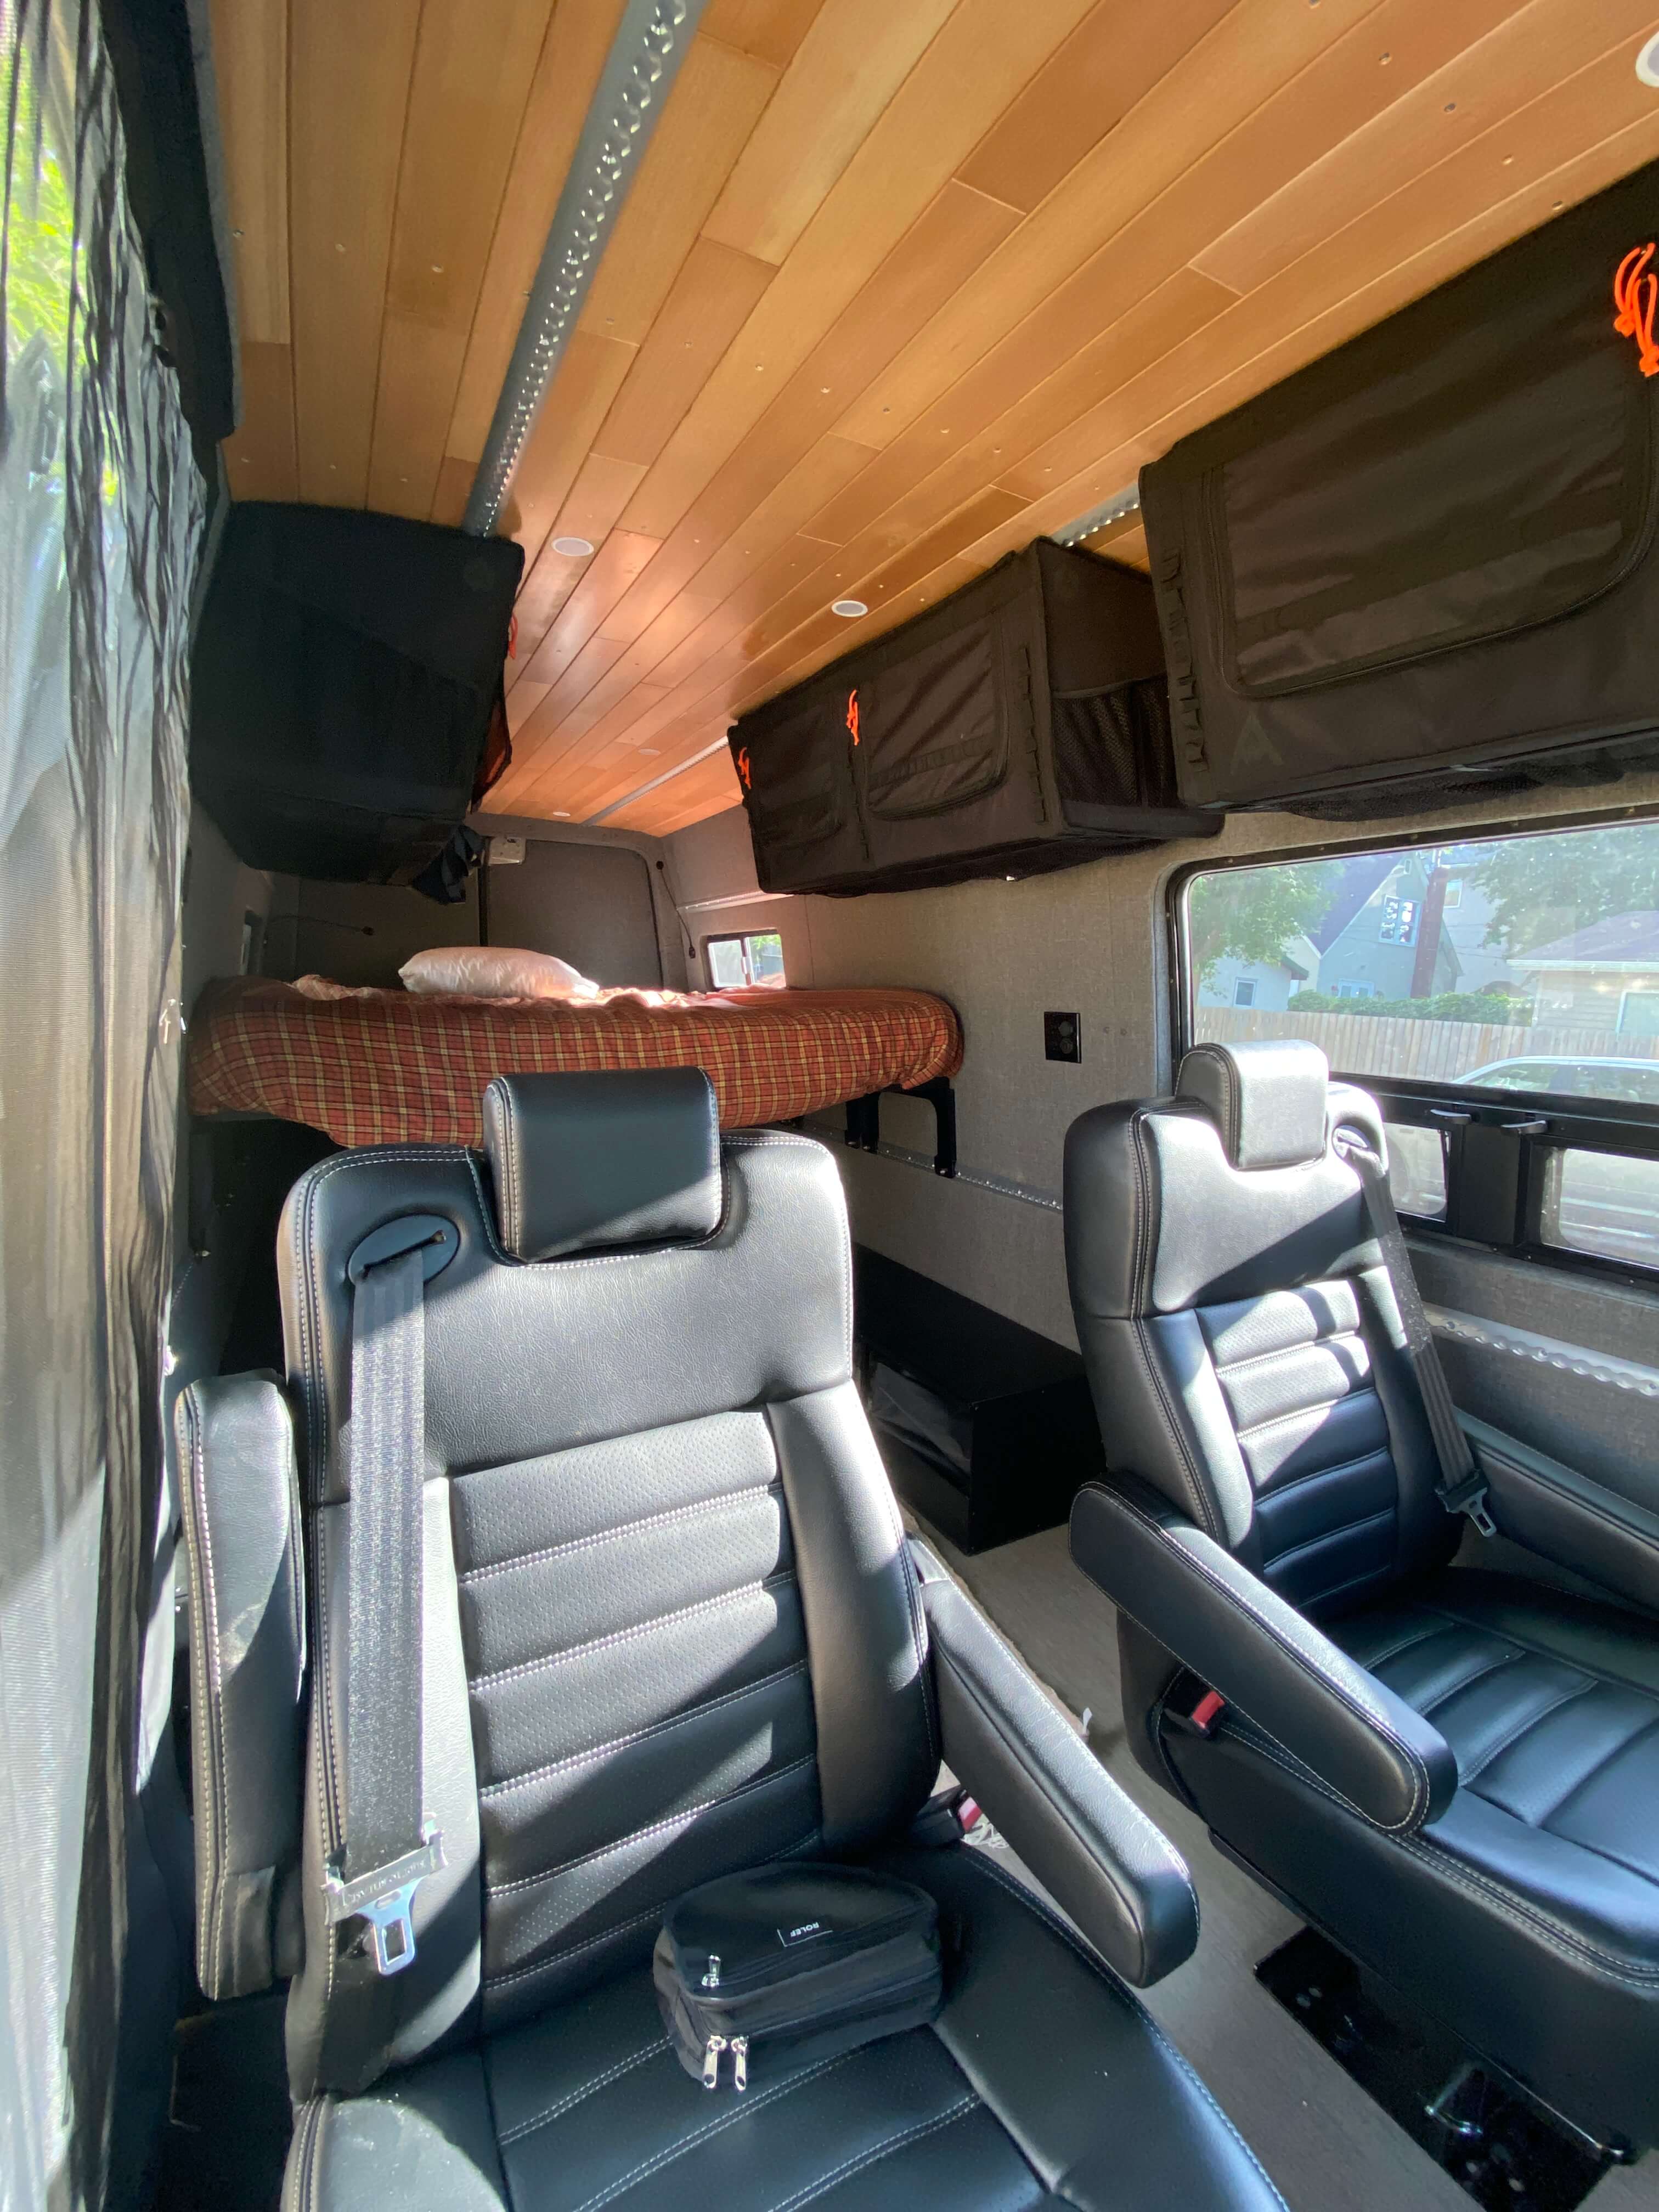 Mercedes Sprinter 144 - 4x4 Camper Conversion - Adventure Wagon